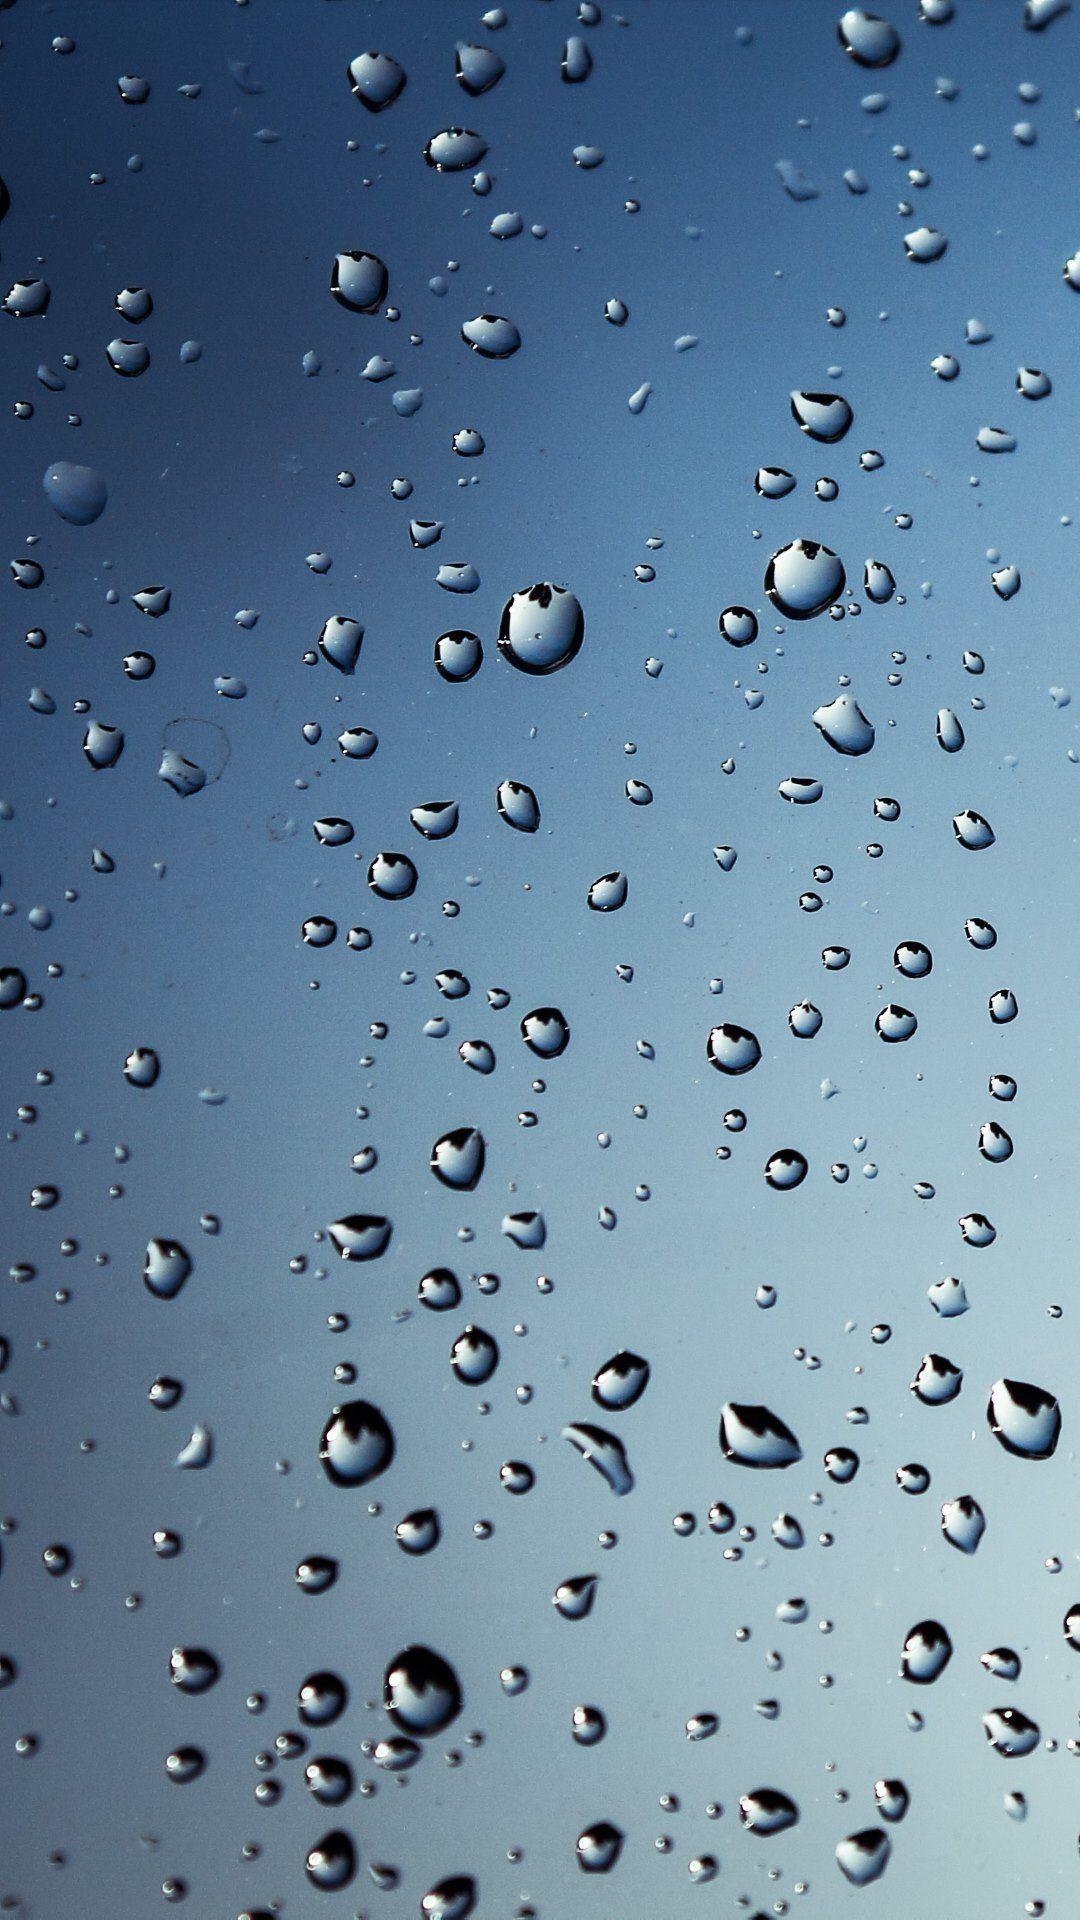 Rain Drops on Window #photo #wallpaper #free Photographer: Krzysztof